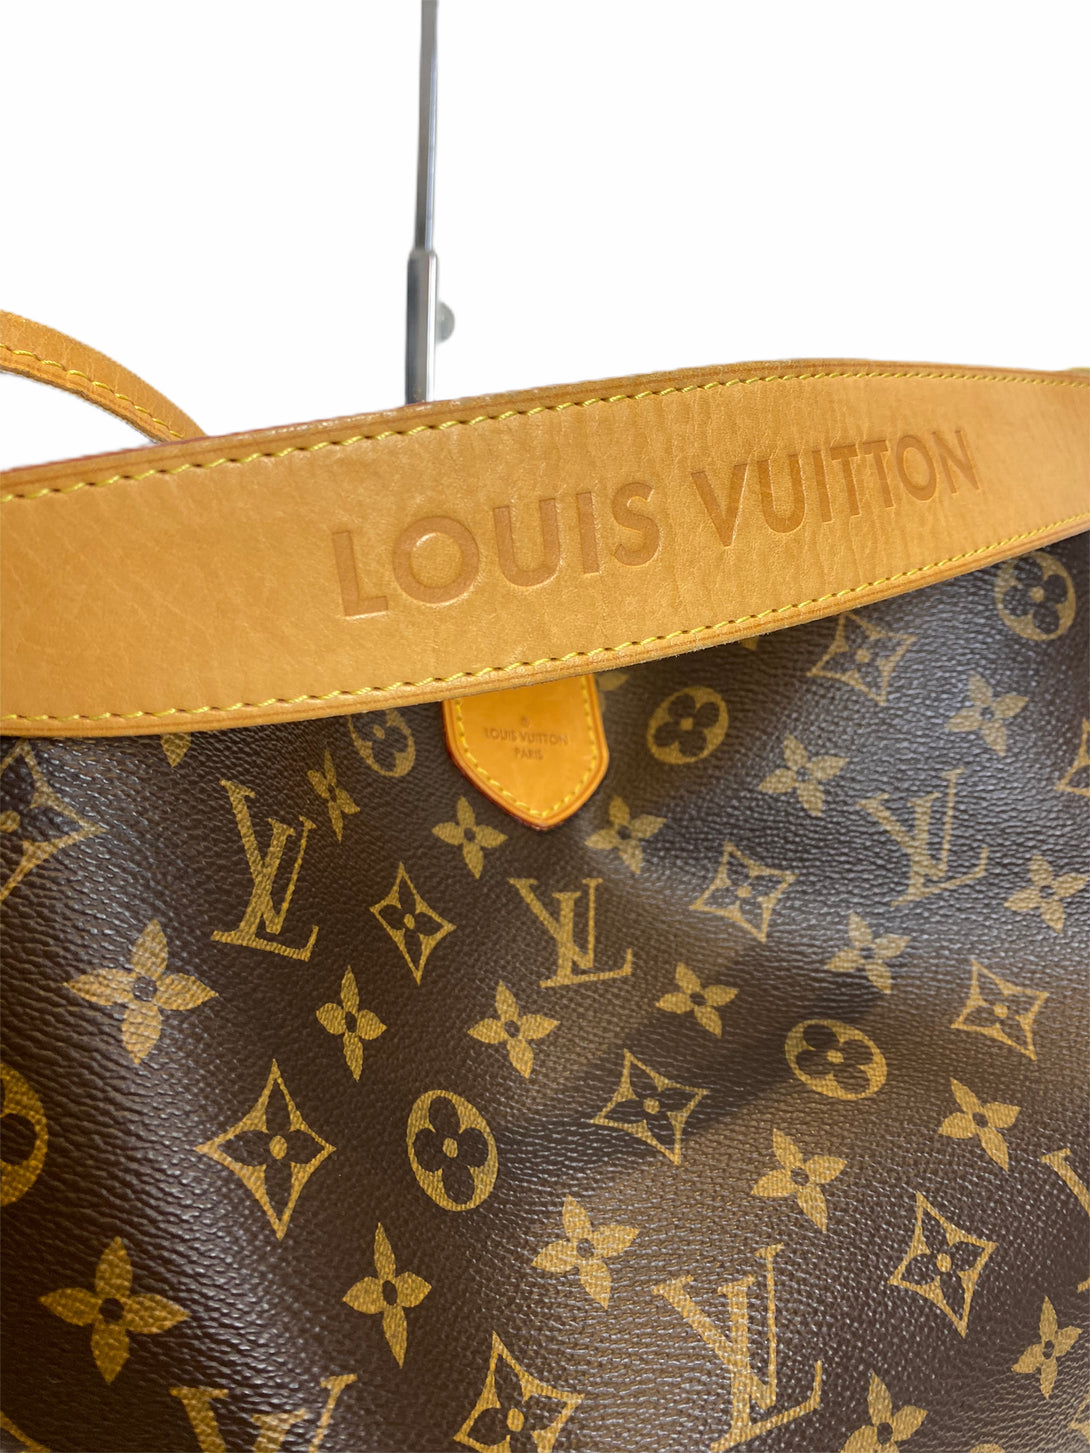 Louis Vuitton Monogram Canvas Delightful - as seen on Instagram 2/08/20 - Siopaella Designer Exchange